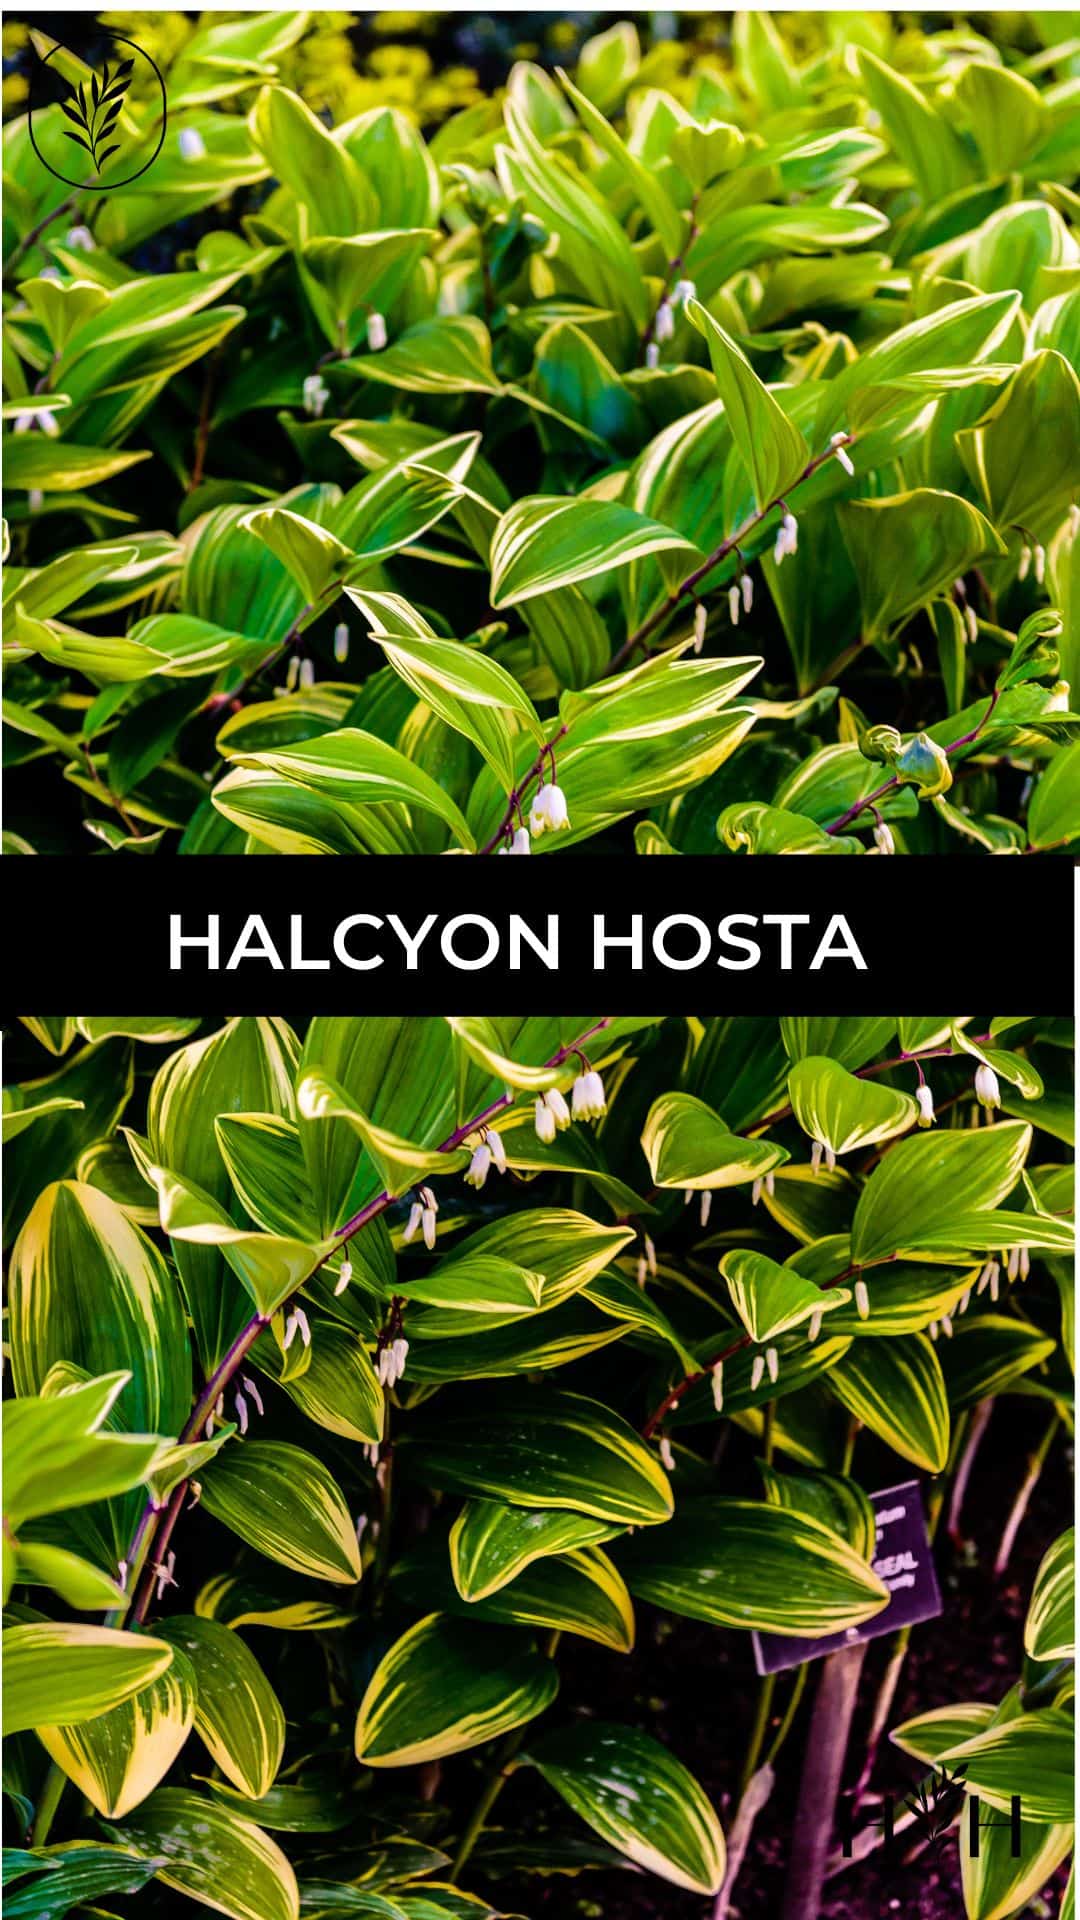 Halcyon hosta via @home4theharvest